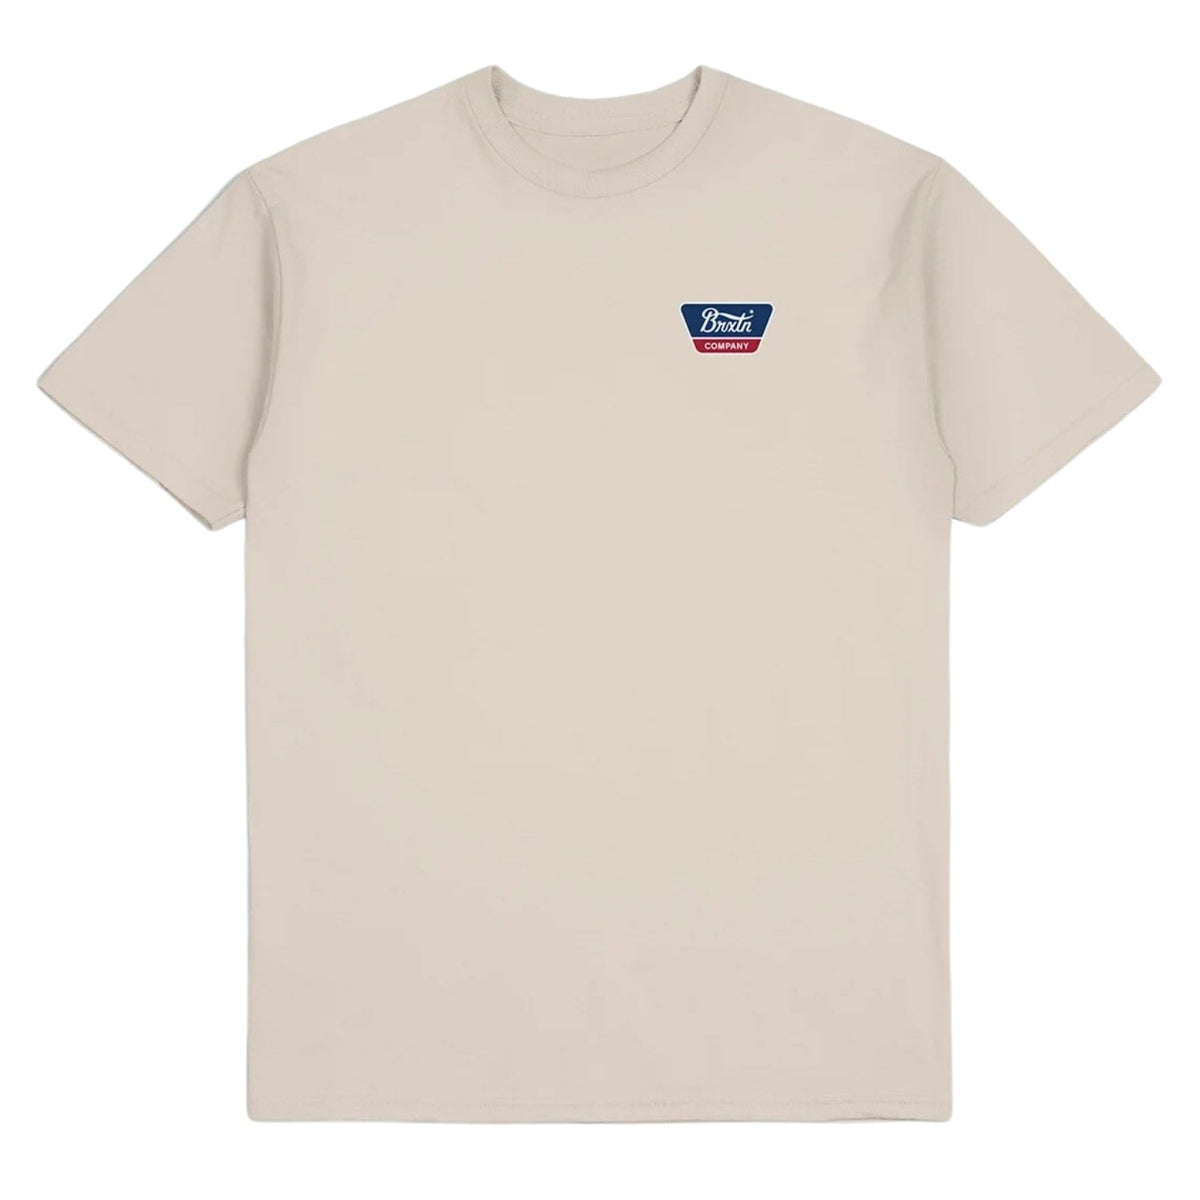 Brixton Linwood T-Shirt - Cream - Mens Graphic T-Shirt by Brixton